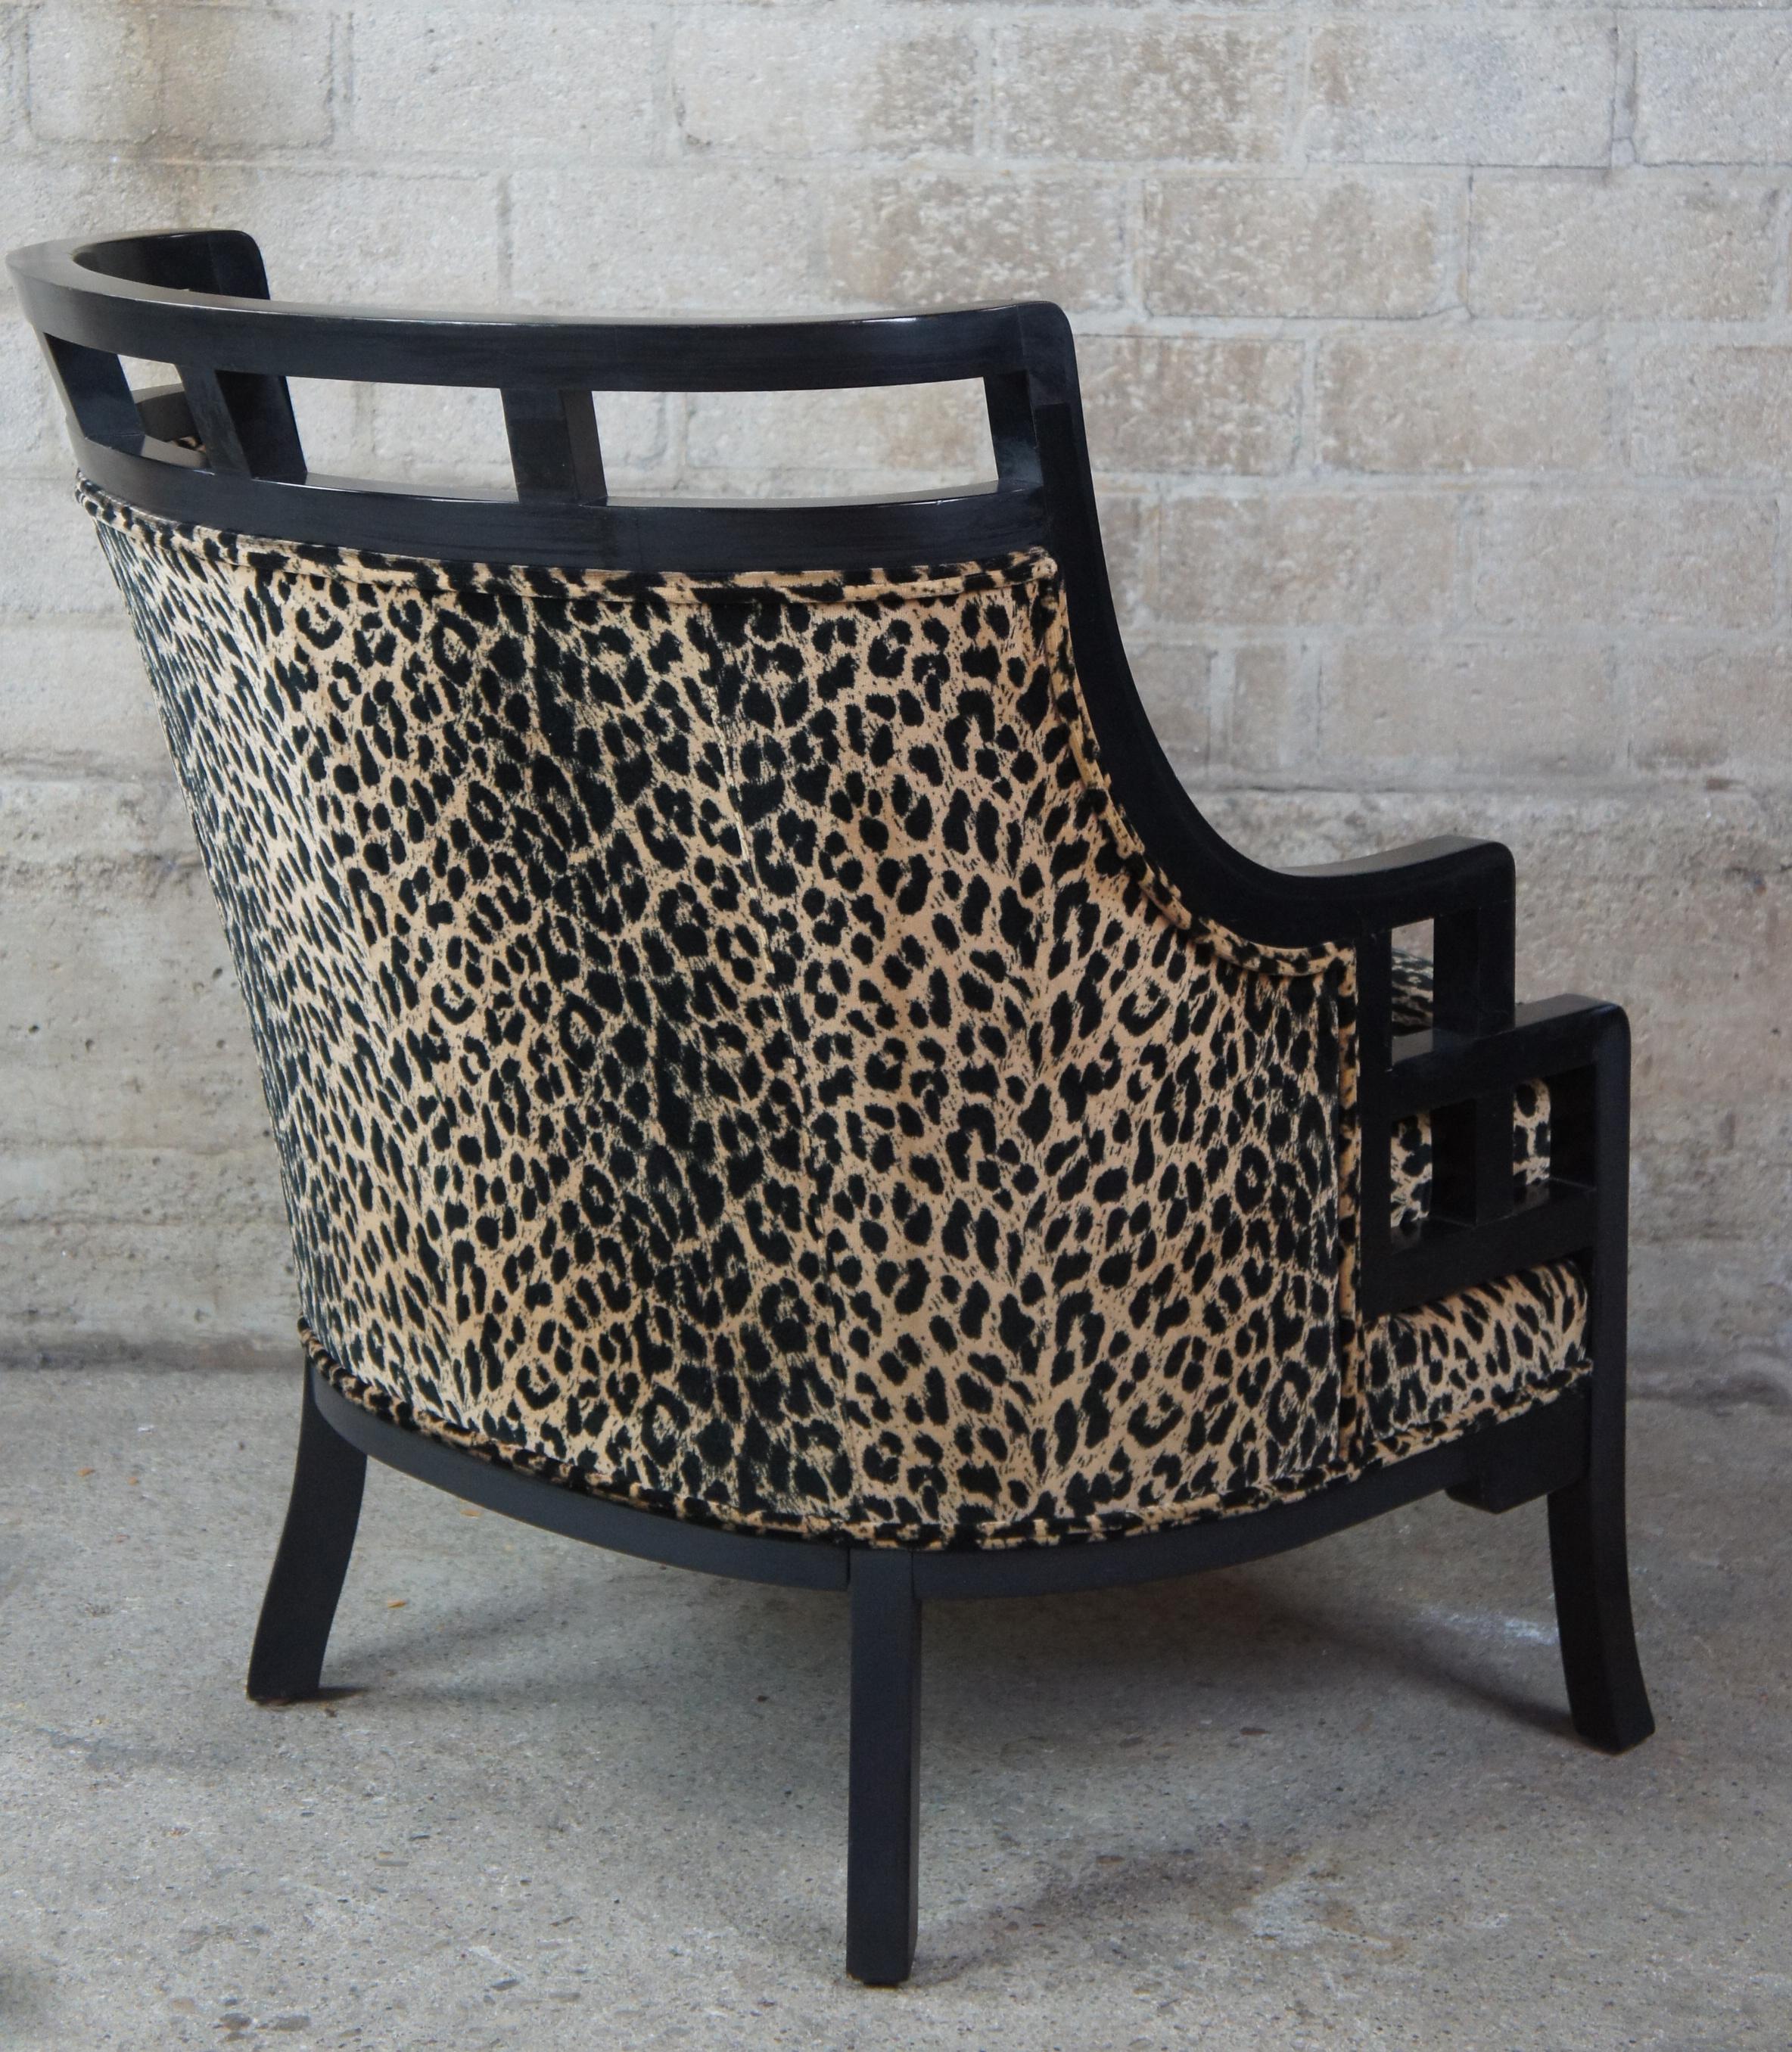 Fabric 2 Wallis Simpson Cheetah Barrel Club Lounge Chairs Jay Spectre for Century MCM